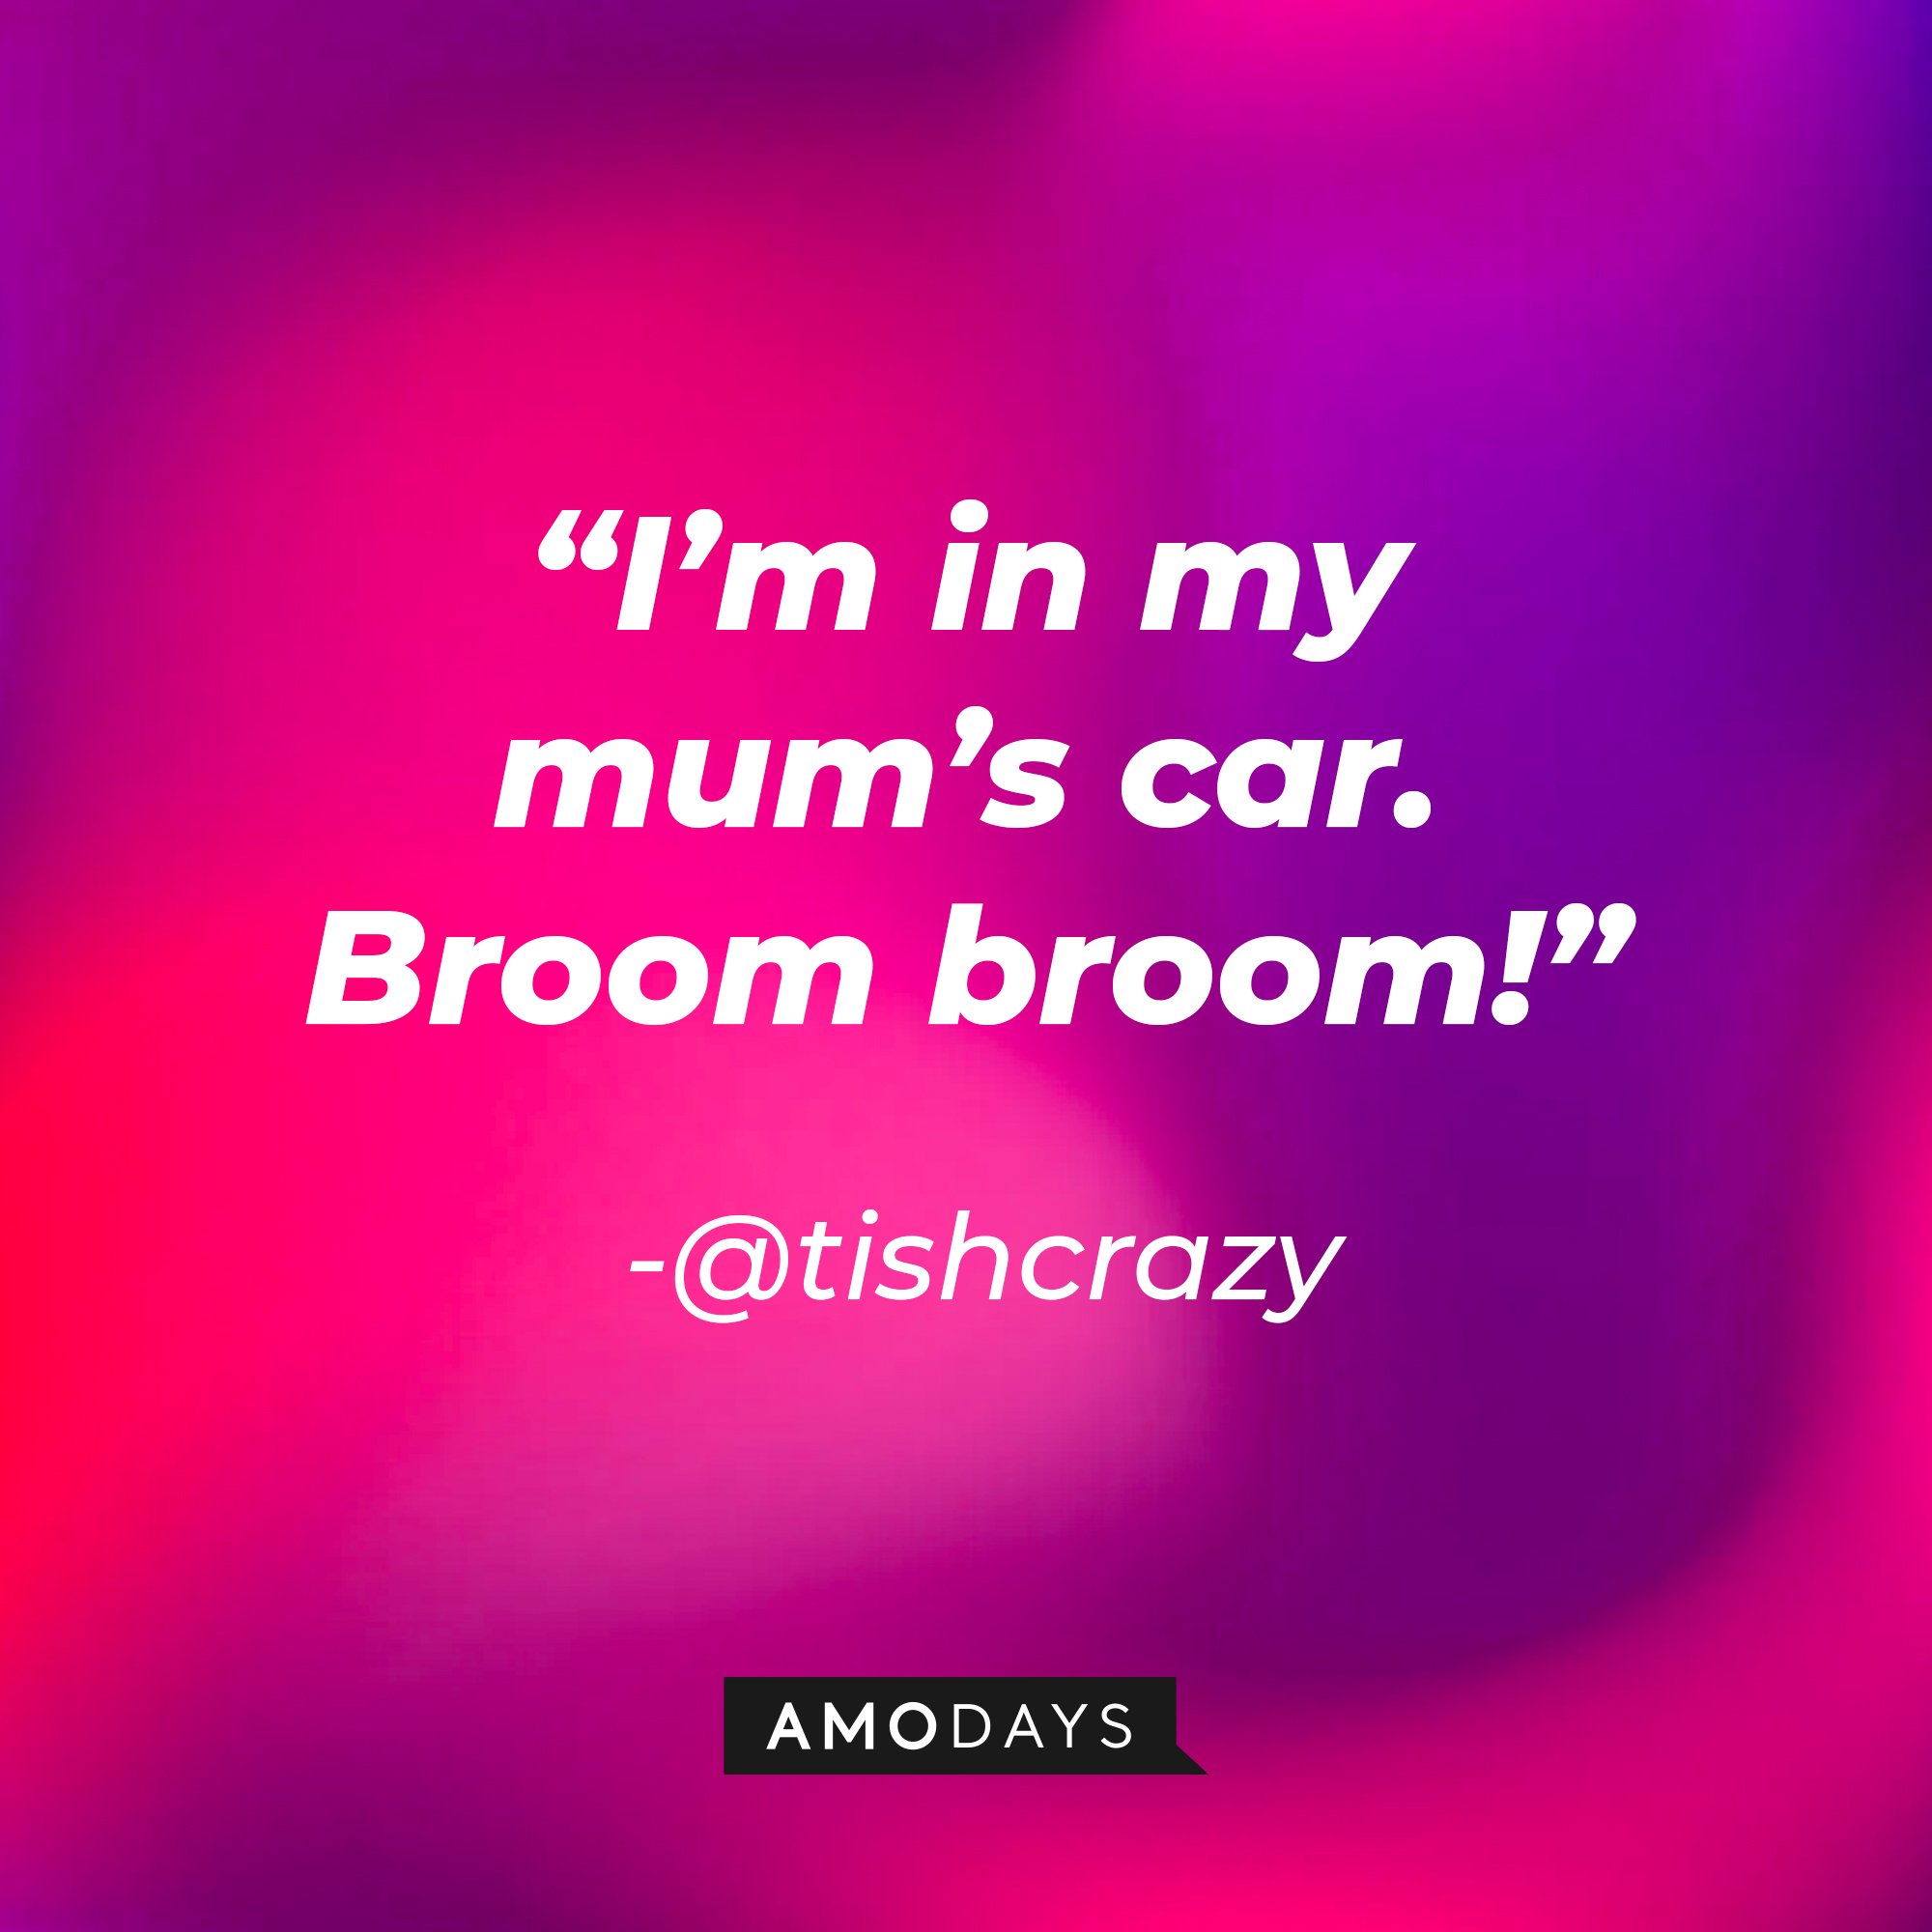 @tishcrazy's quote: “I’m in my mum’s car. Broom broom!” | Image: AmoDays